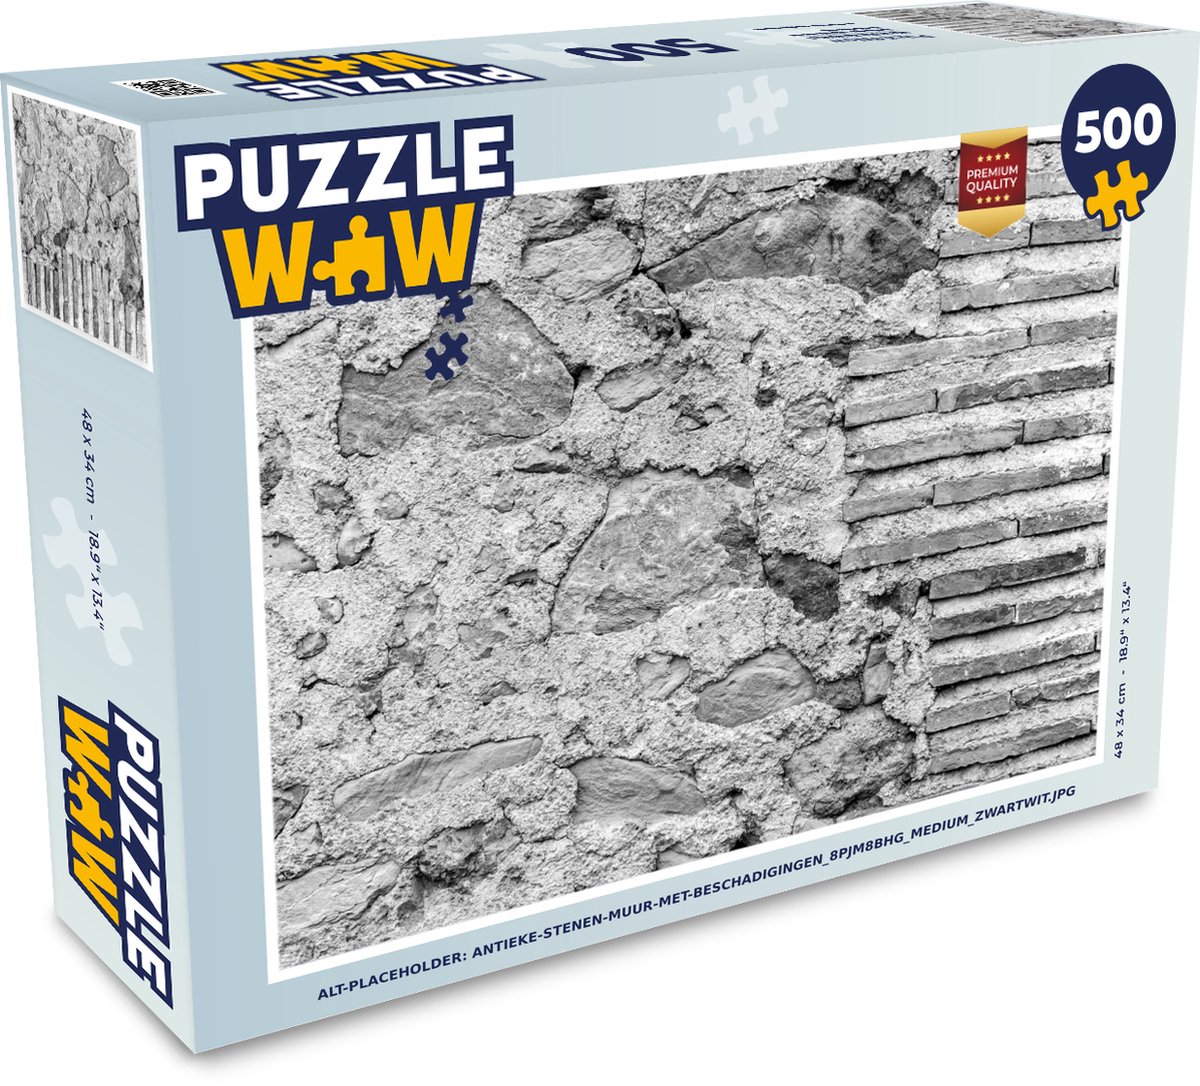 Afbeelding van product PuzzleWow  Puzzel Muur - Baksteen - Keien - Legpuzzel - Puzzel 500 stukjes